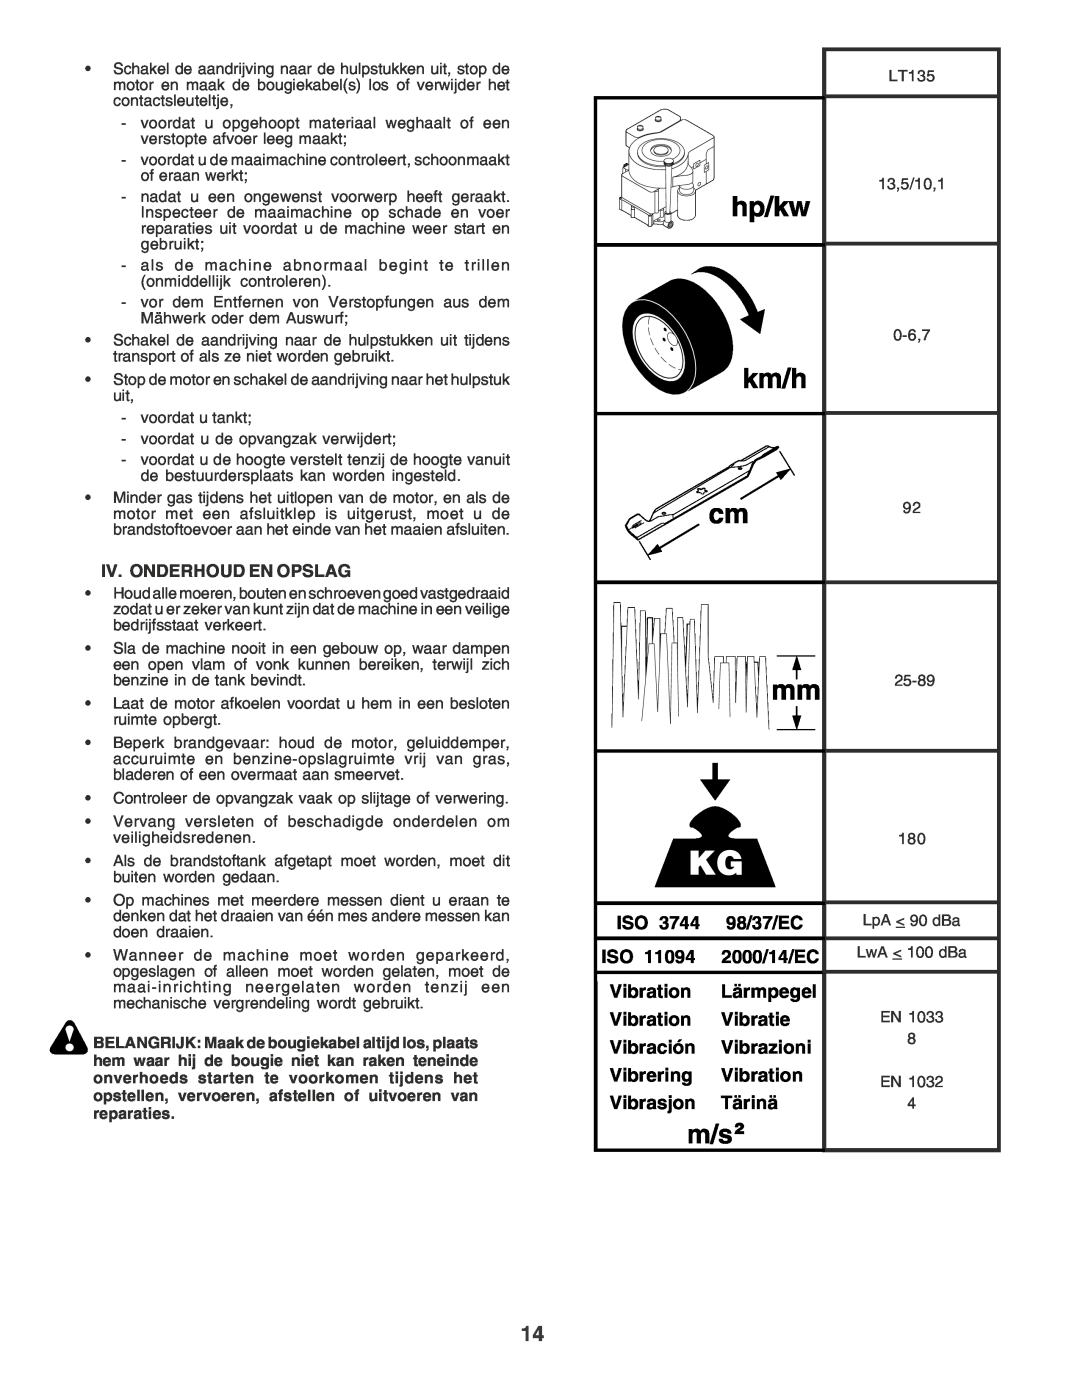 Husqvarna LT135 instruction manual Iv. Onderhoud En Opslag, 2000/14/EC 